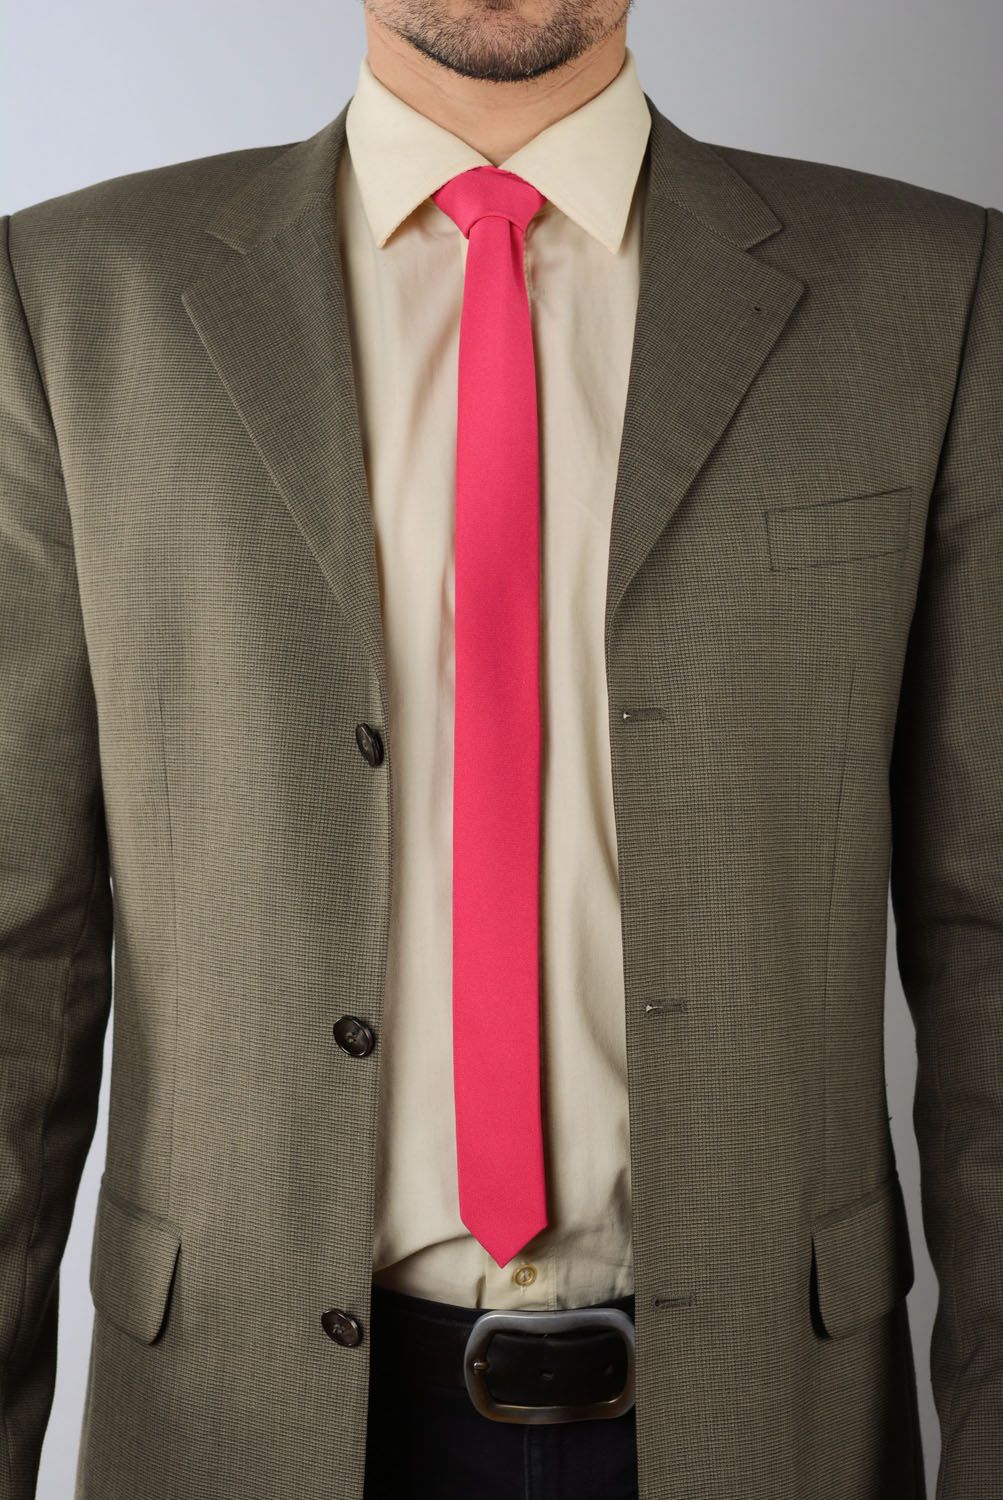 Cravate en gabardine rose vif faite main photo 1